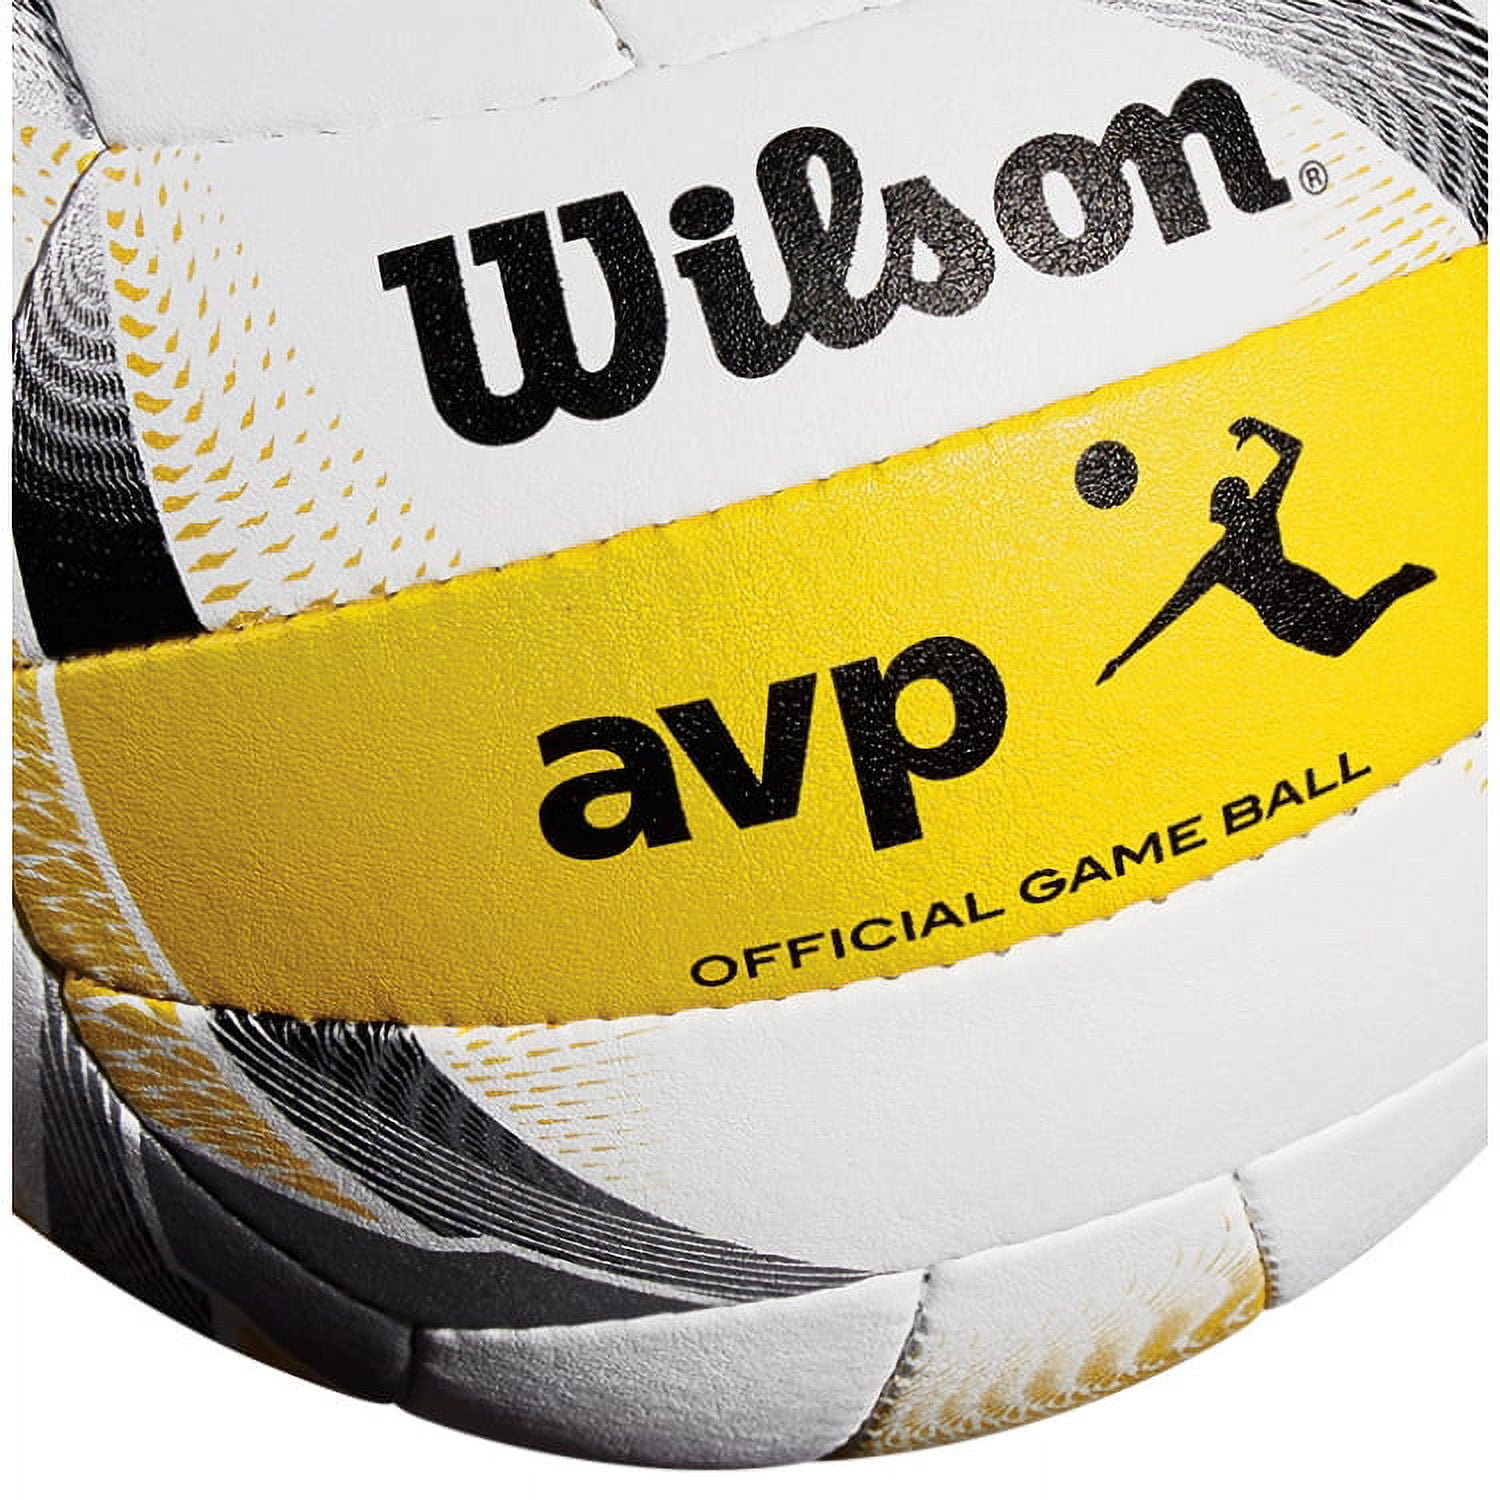 Wilson Official Game Ball of AVP Pro Beach Volleyball Tour